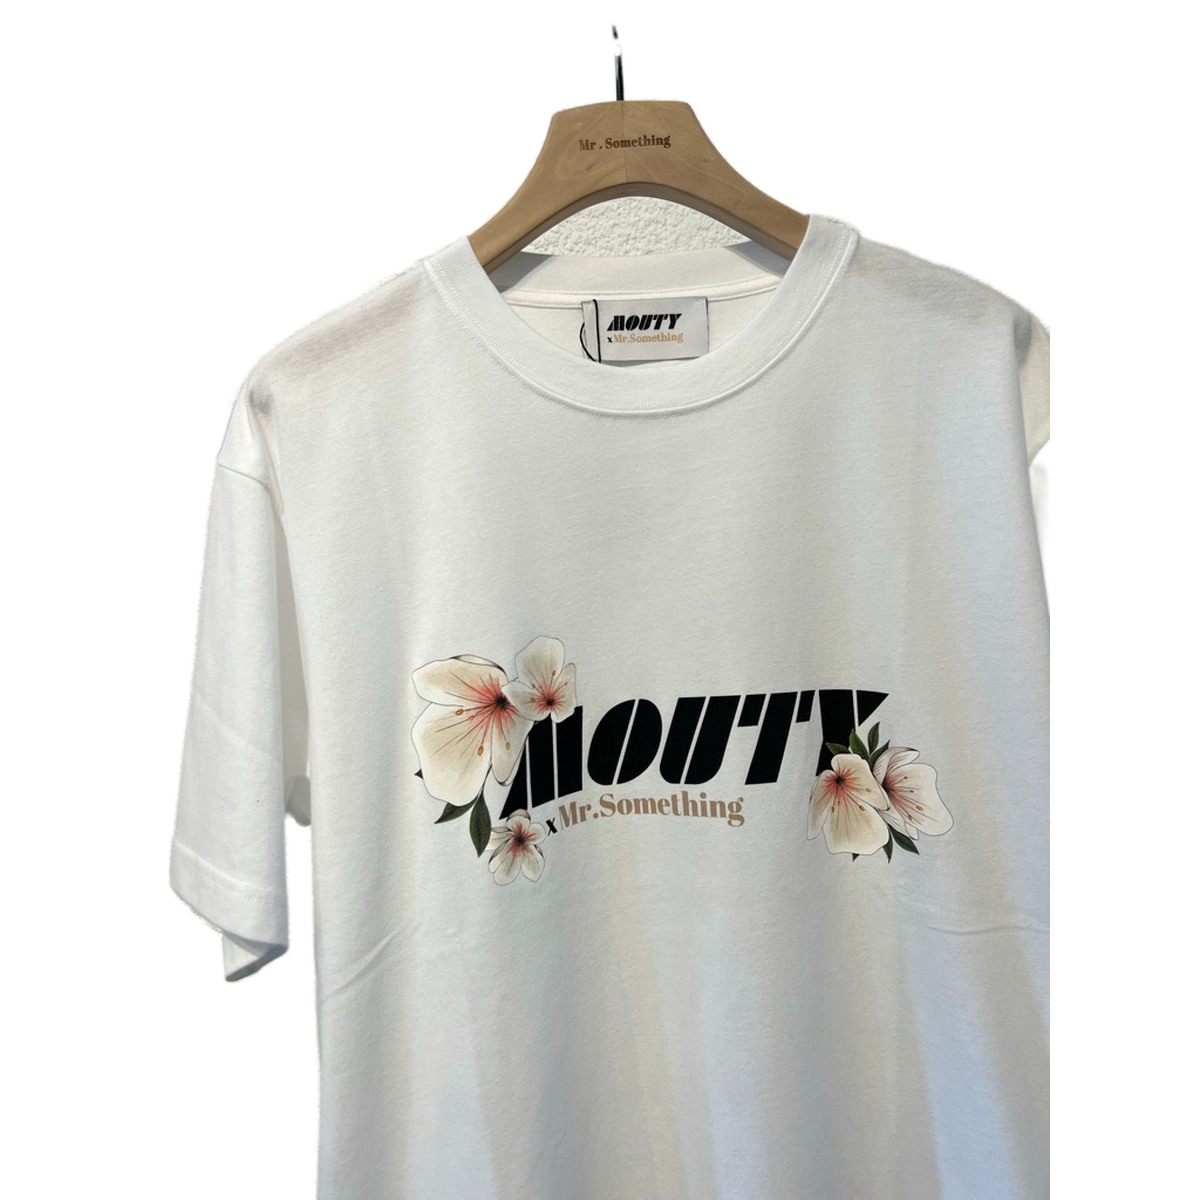 Mouty X Mr.something Flower White T-shirt